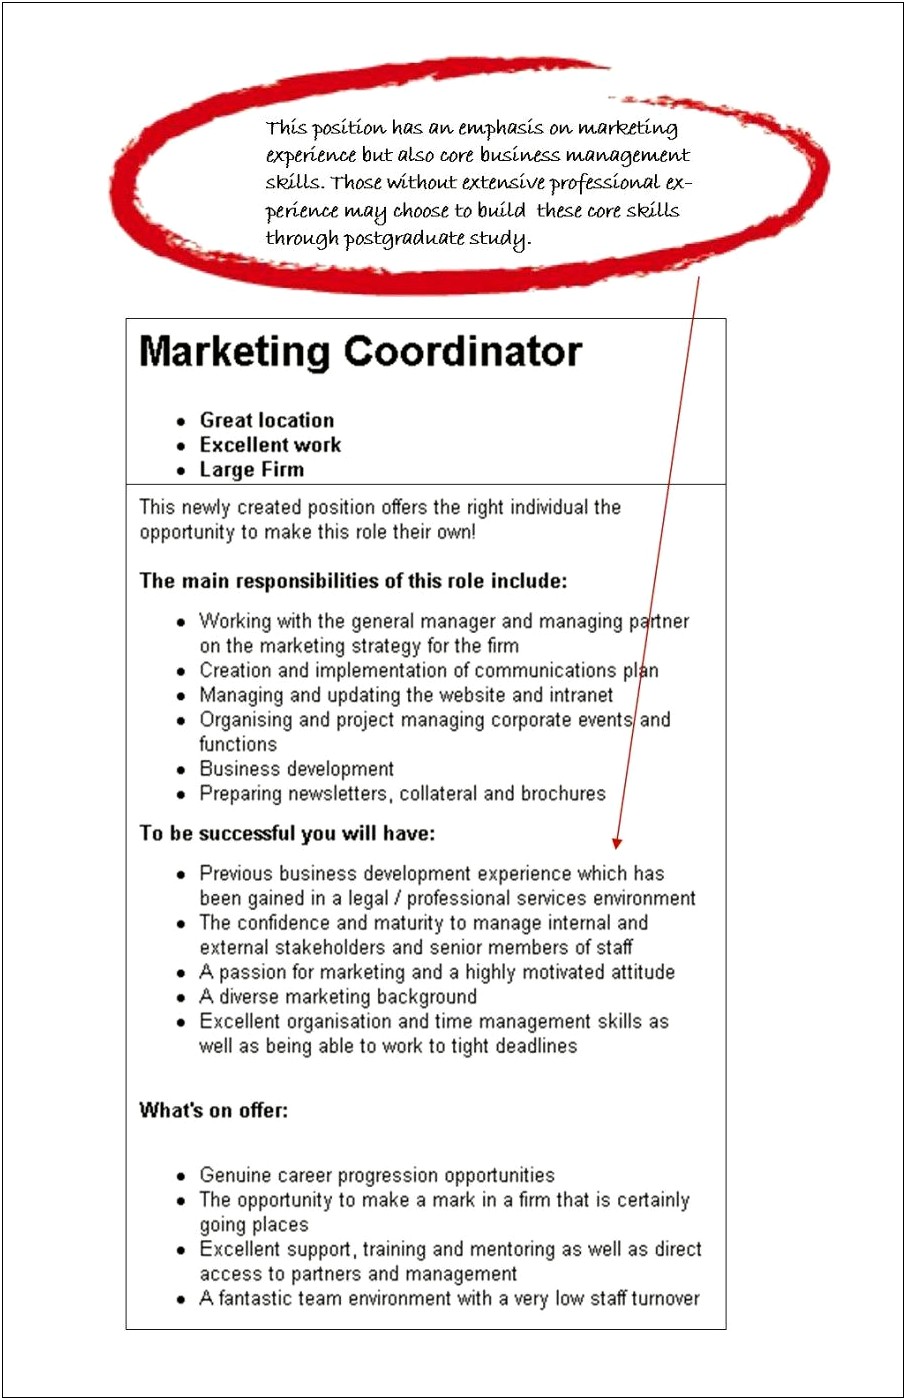 Sample Resume Objectives For Marketing Coordinator